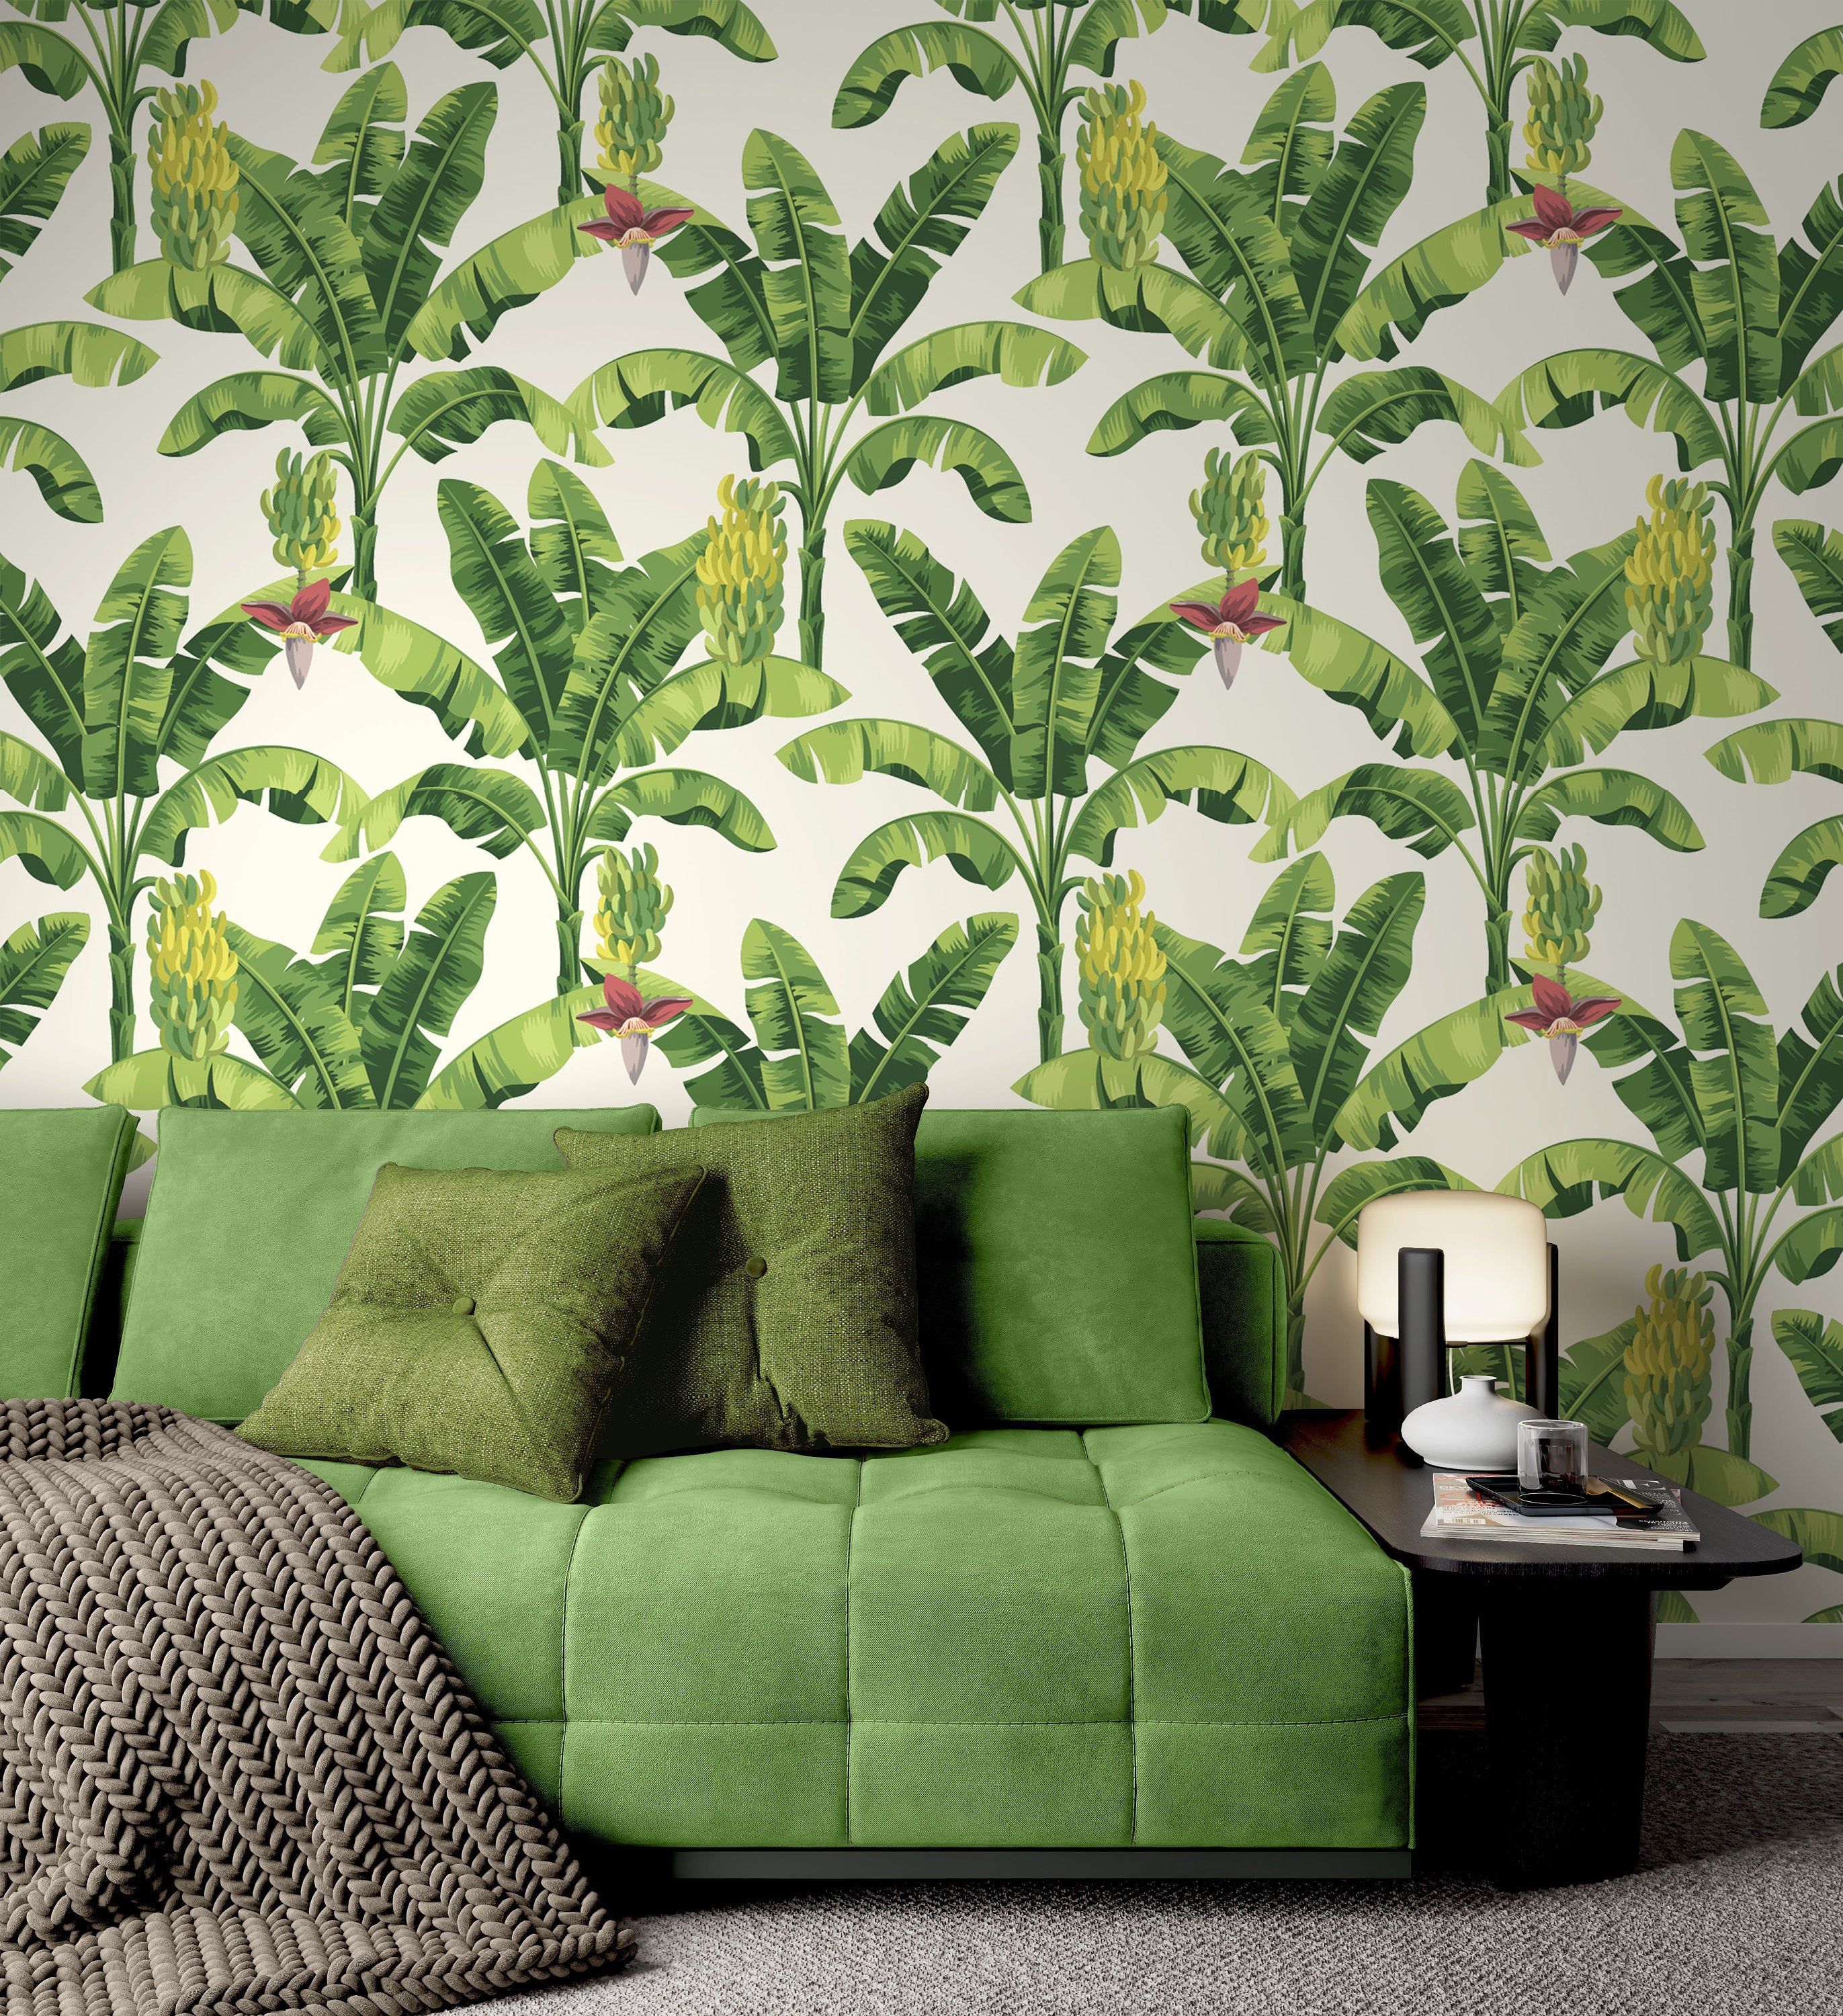 Tropical Banana Palm Tree Plants Leaves Floral Wallpaper